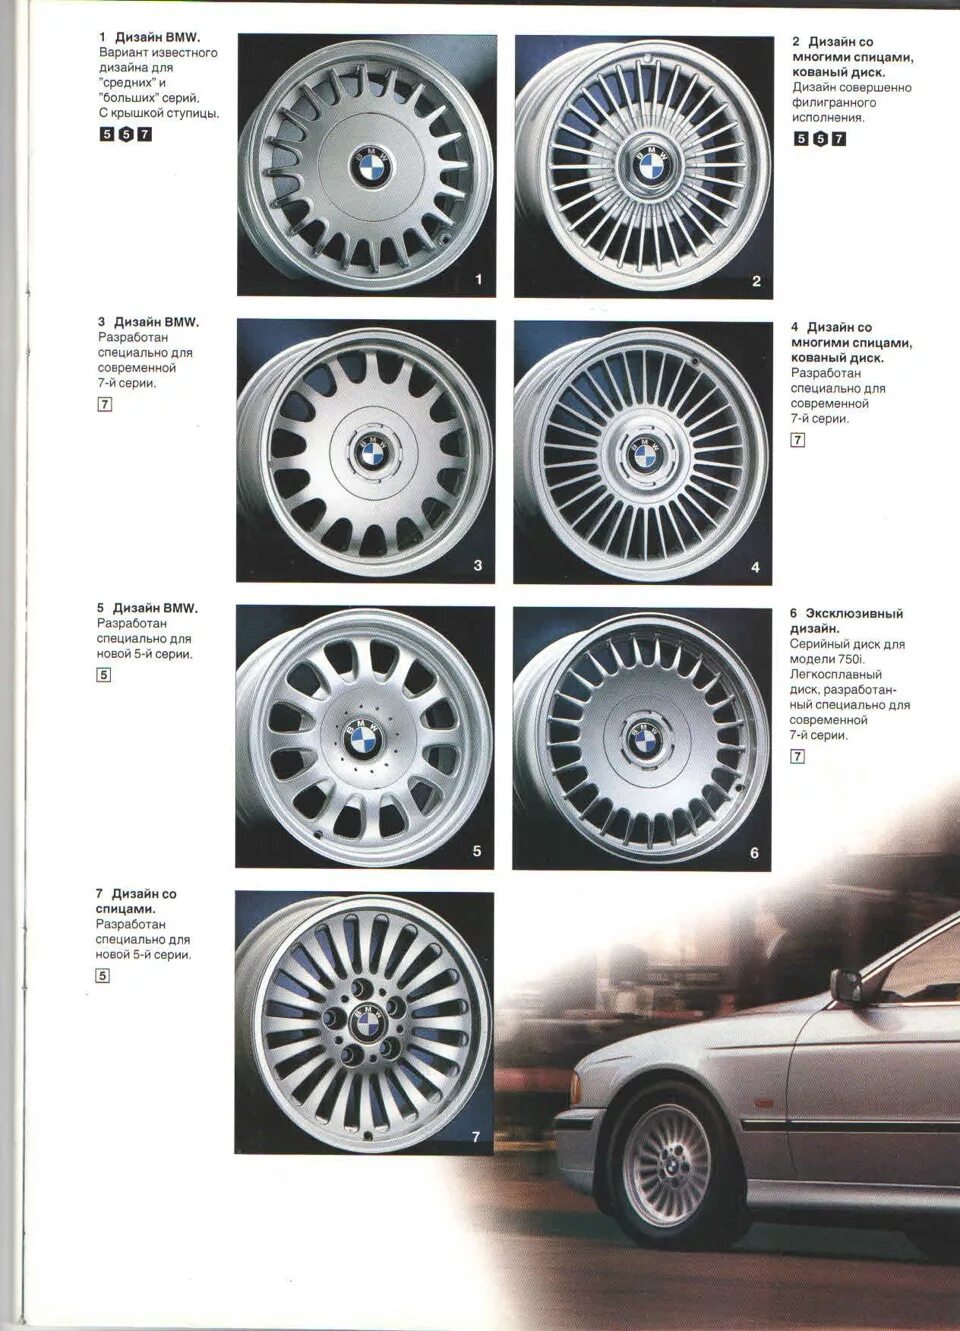 Каталог BMW. Каталог дисков БМВ. БМВ каталог каталог. Каталог стилей дисков BMW.